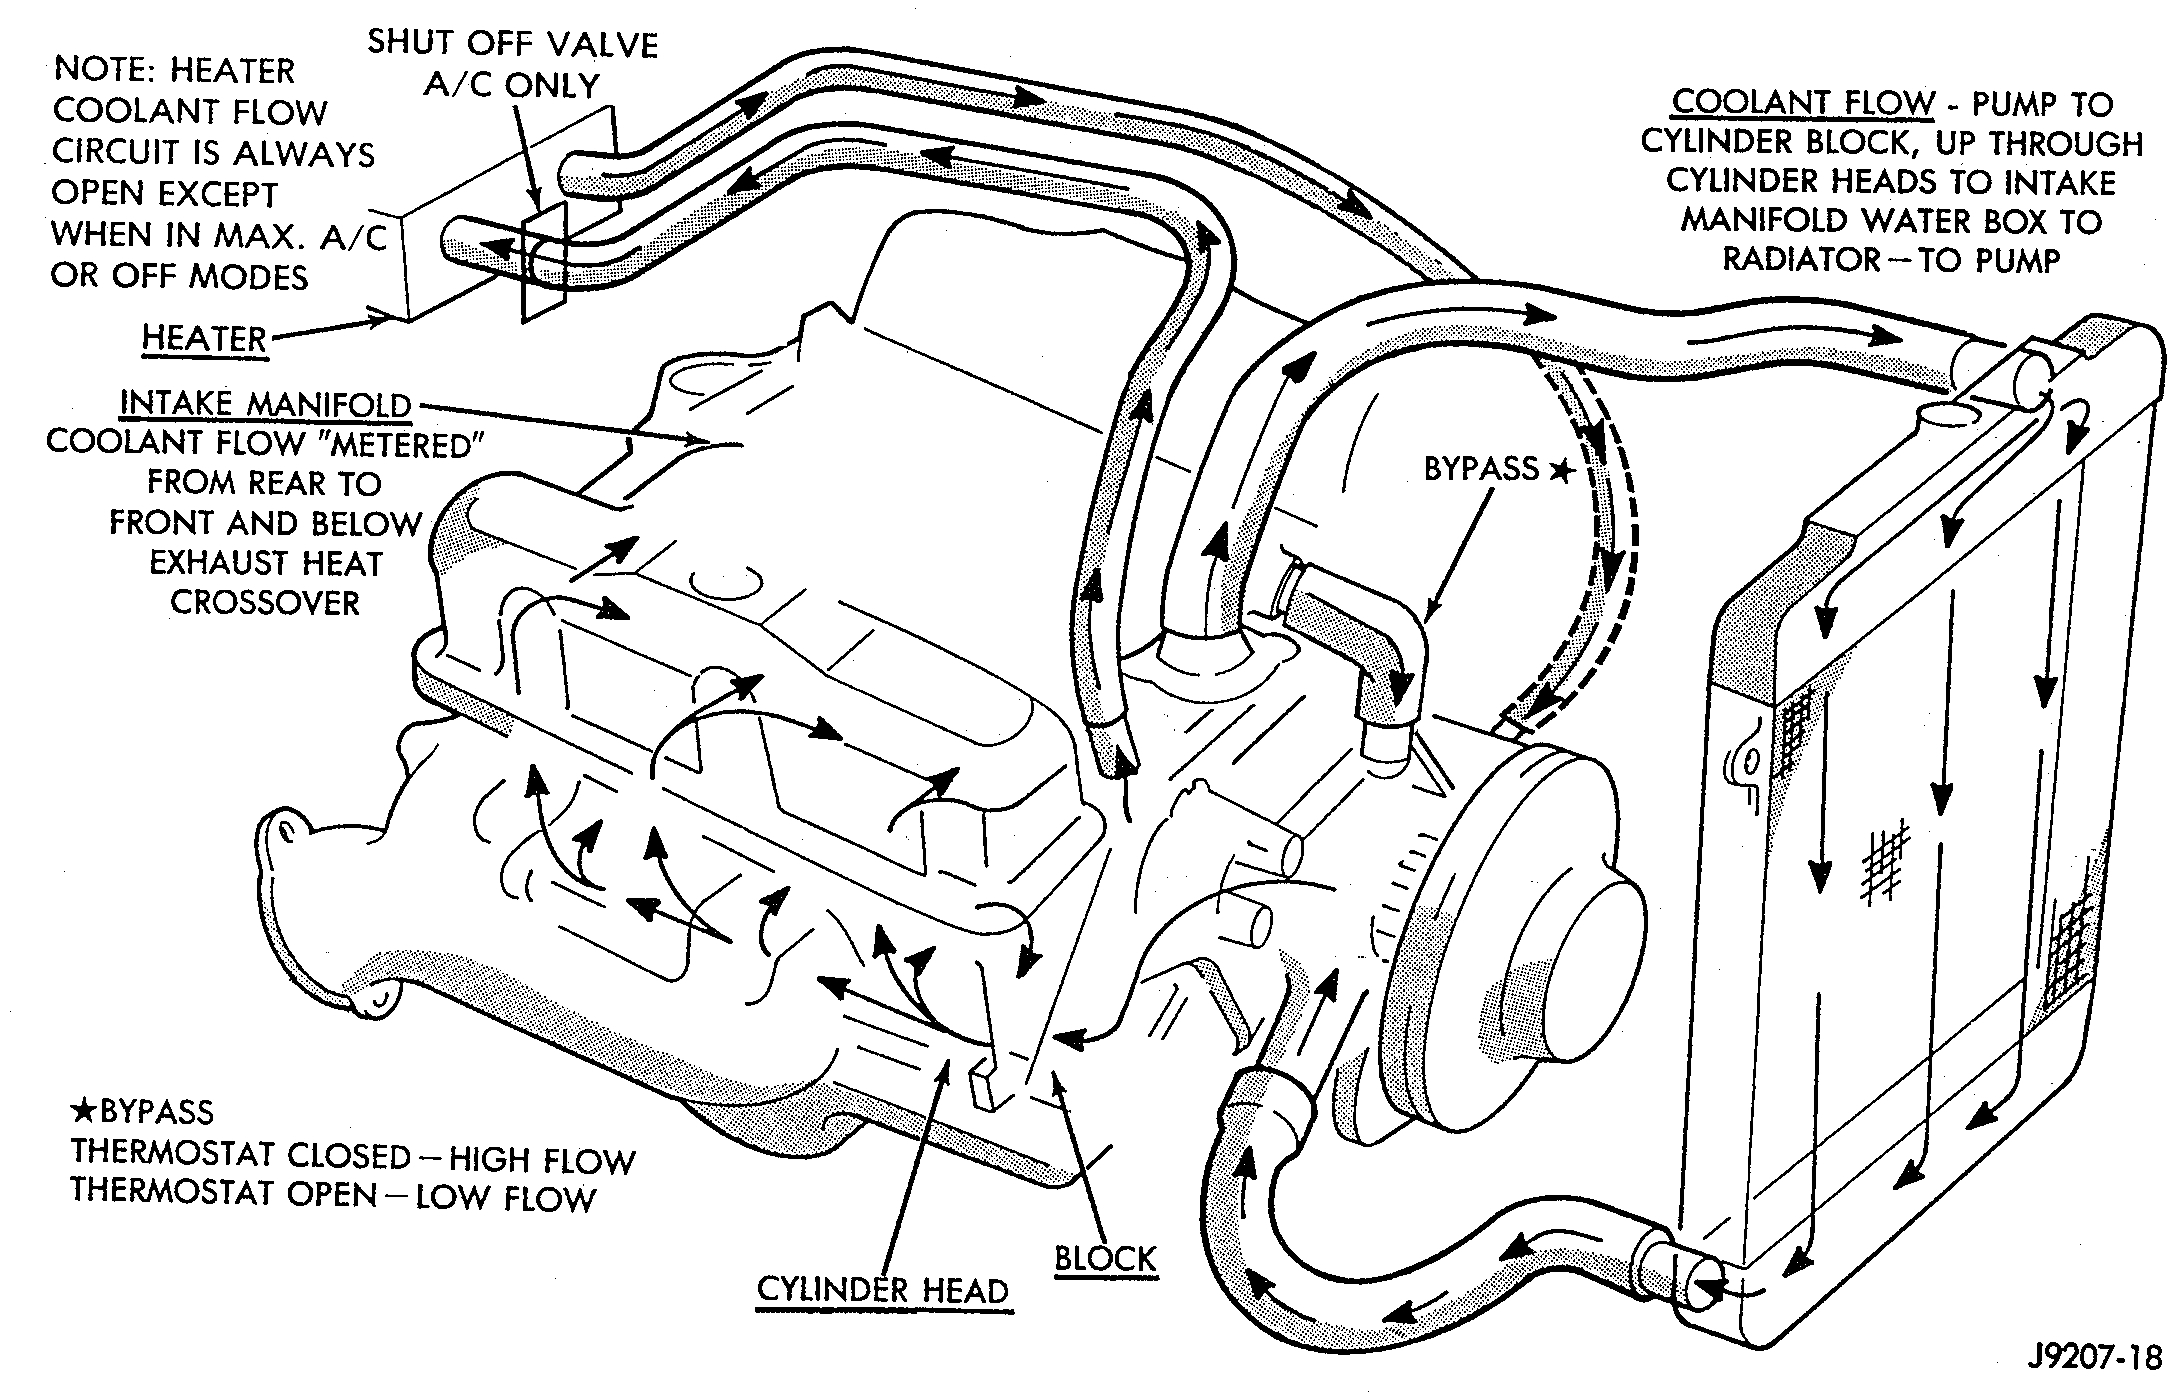 Heater Bypass Tube For 1999-2003 Dodge Ram 1500 Van; Engine Water Pump Inlet Tu